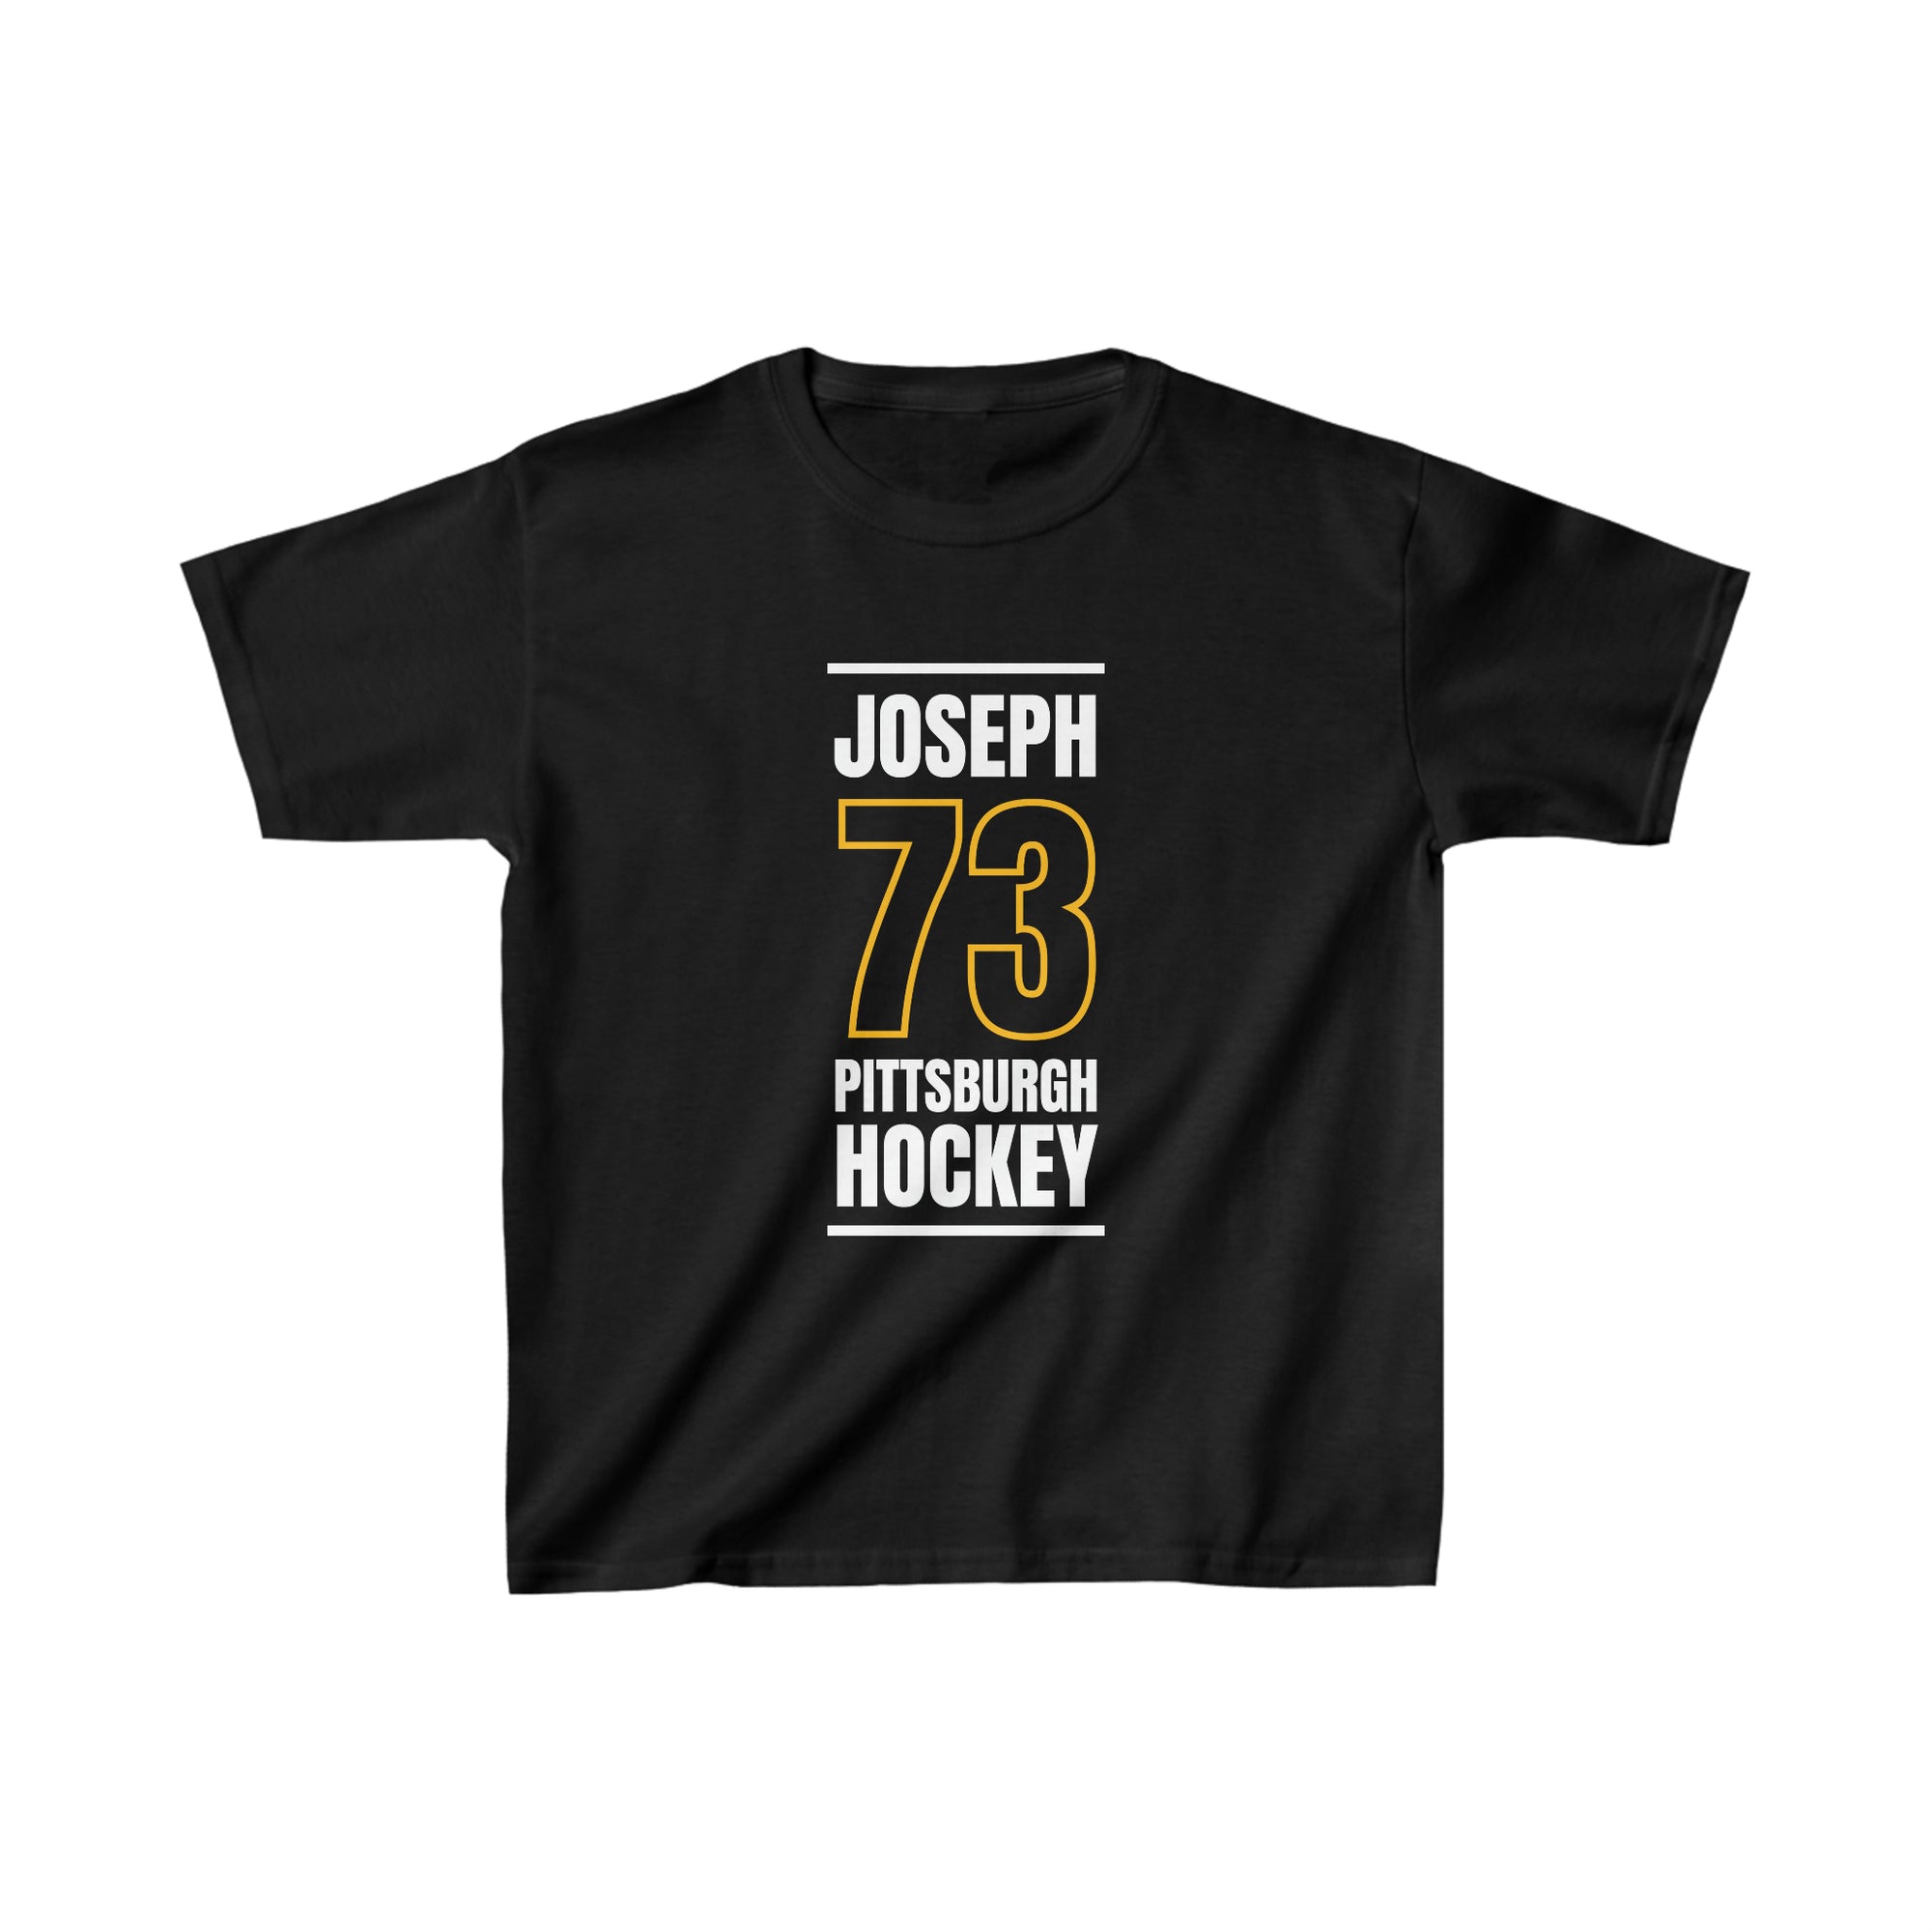 Joseph 73 Pittsburgh Hockey Black Vertical Design Kids Tee